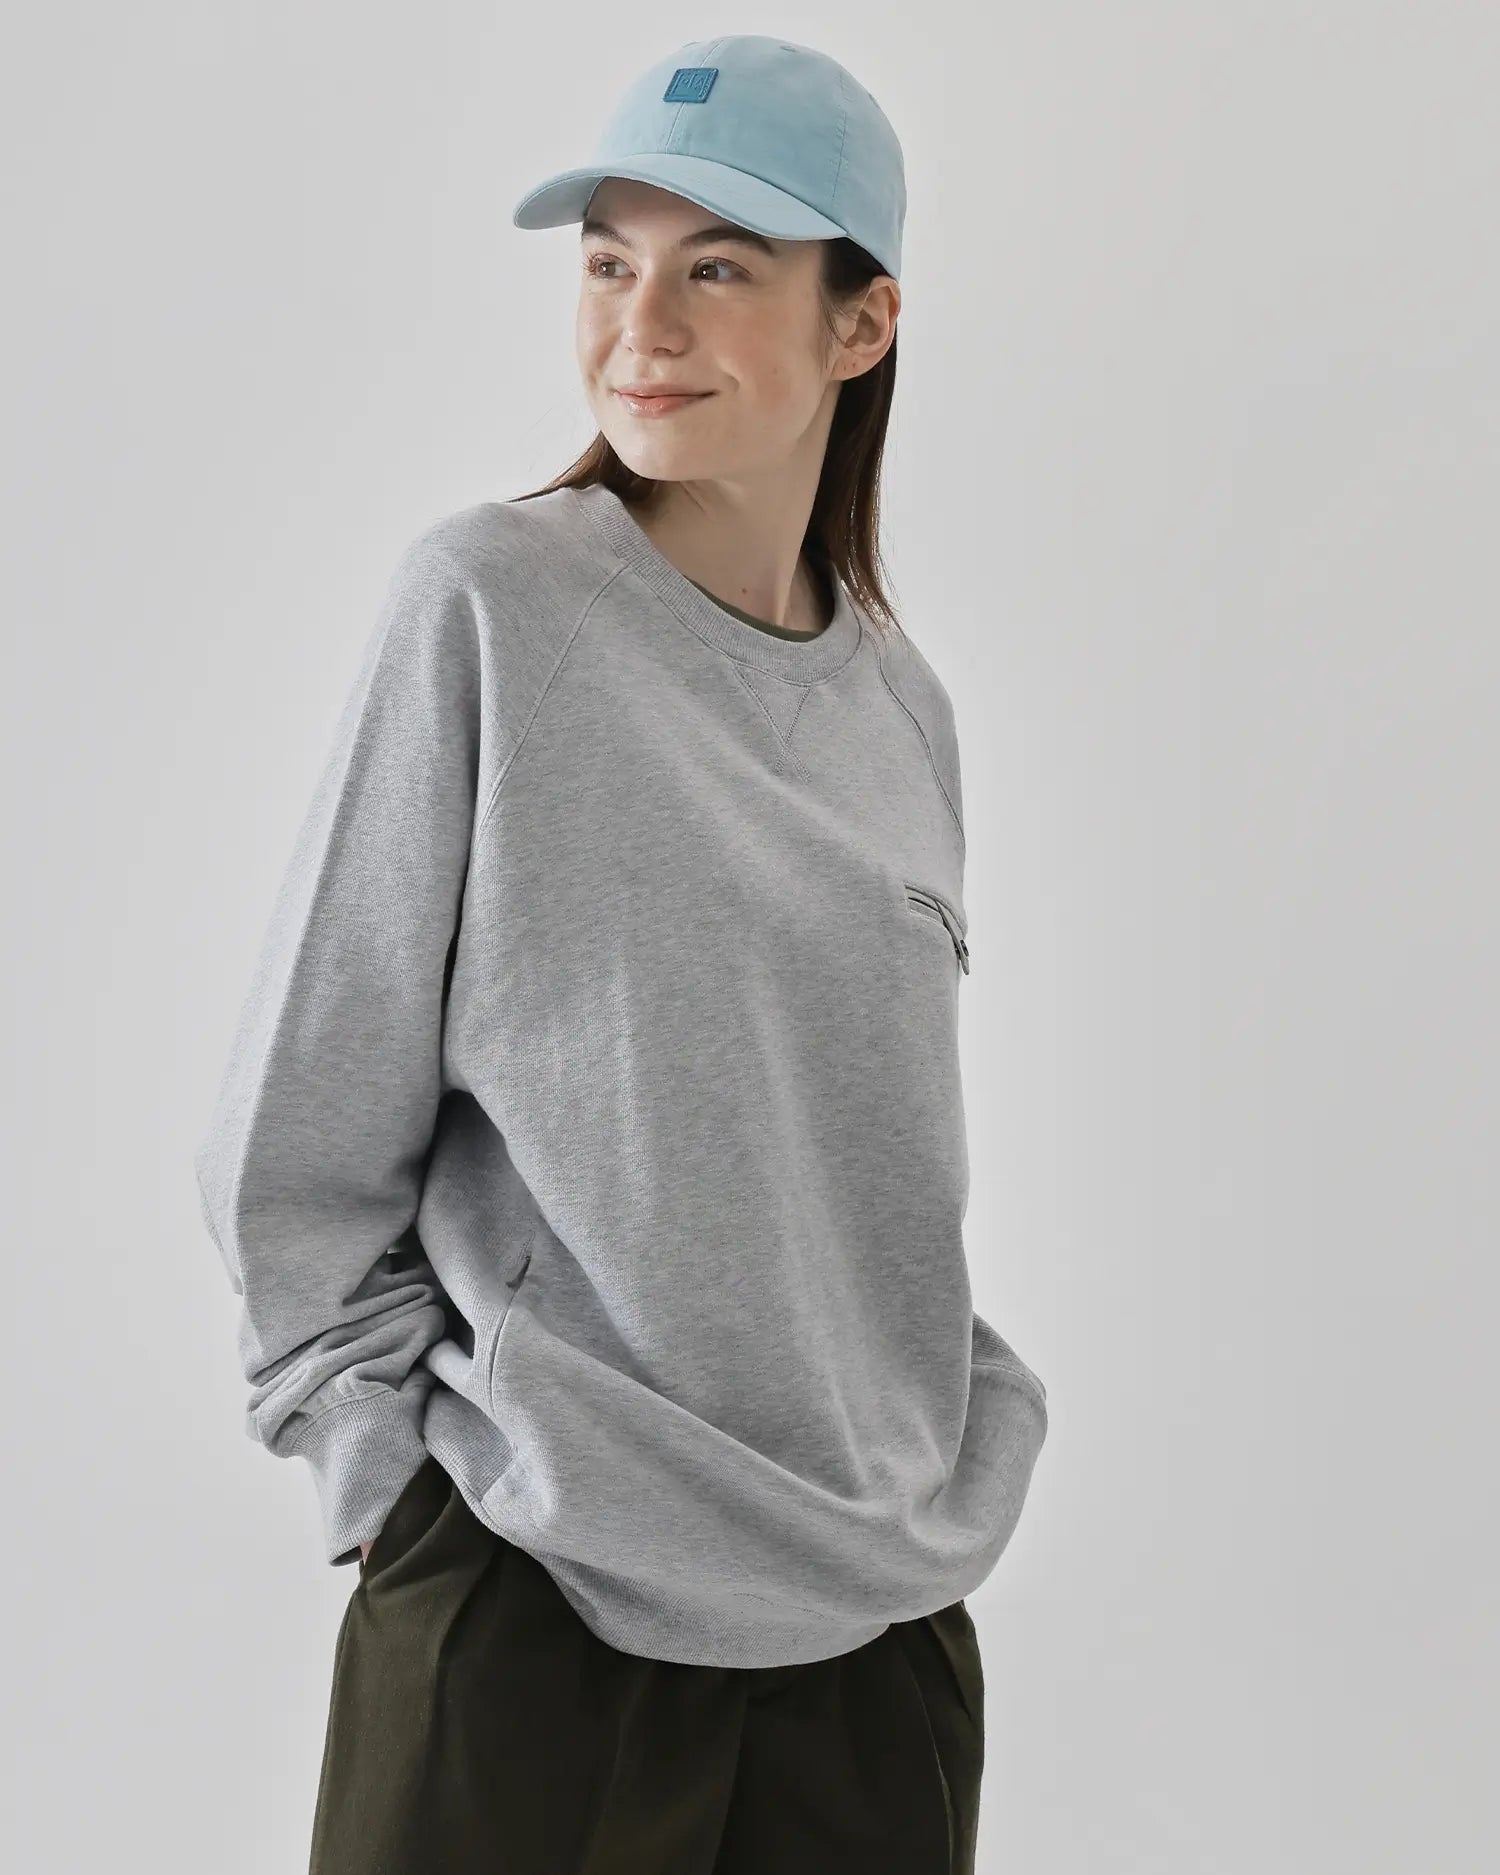 Women's Mixed Fabric Crew Sweatshirt in Gray 06 #gray